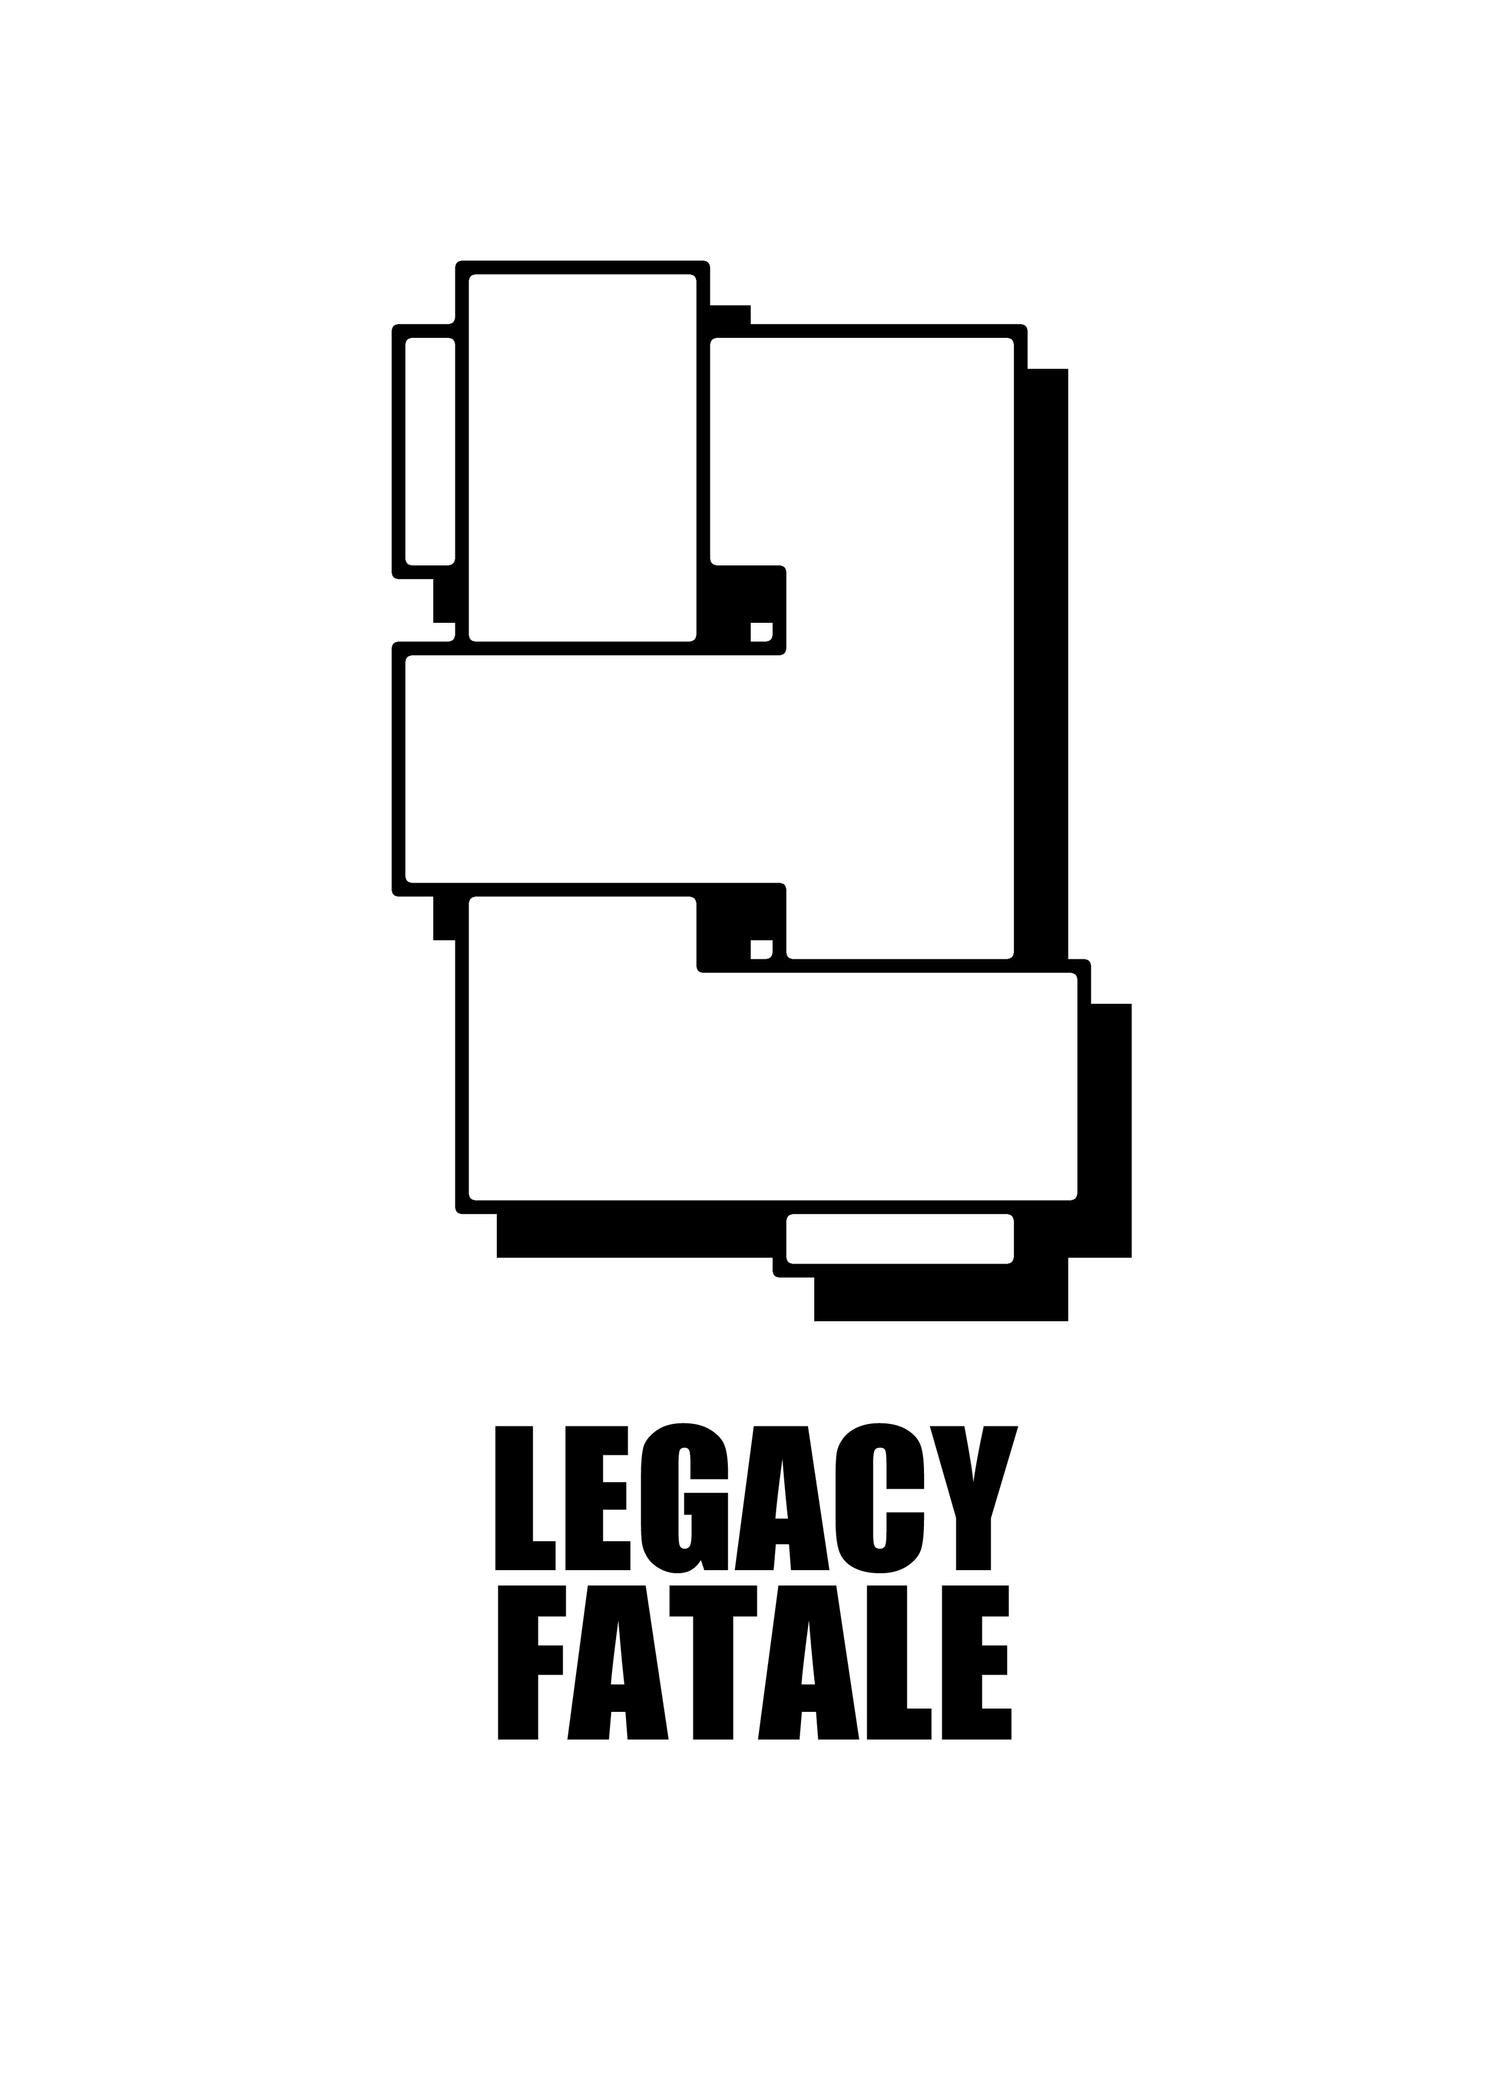 legacy fatale